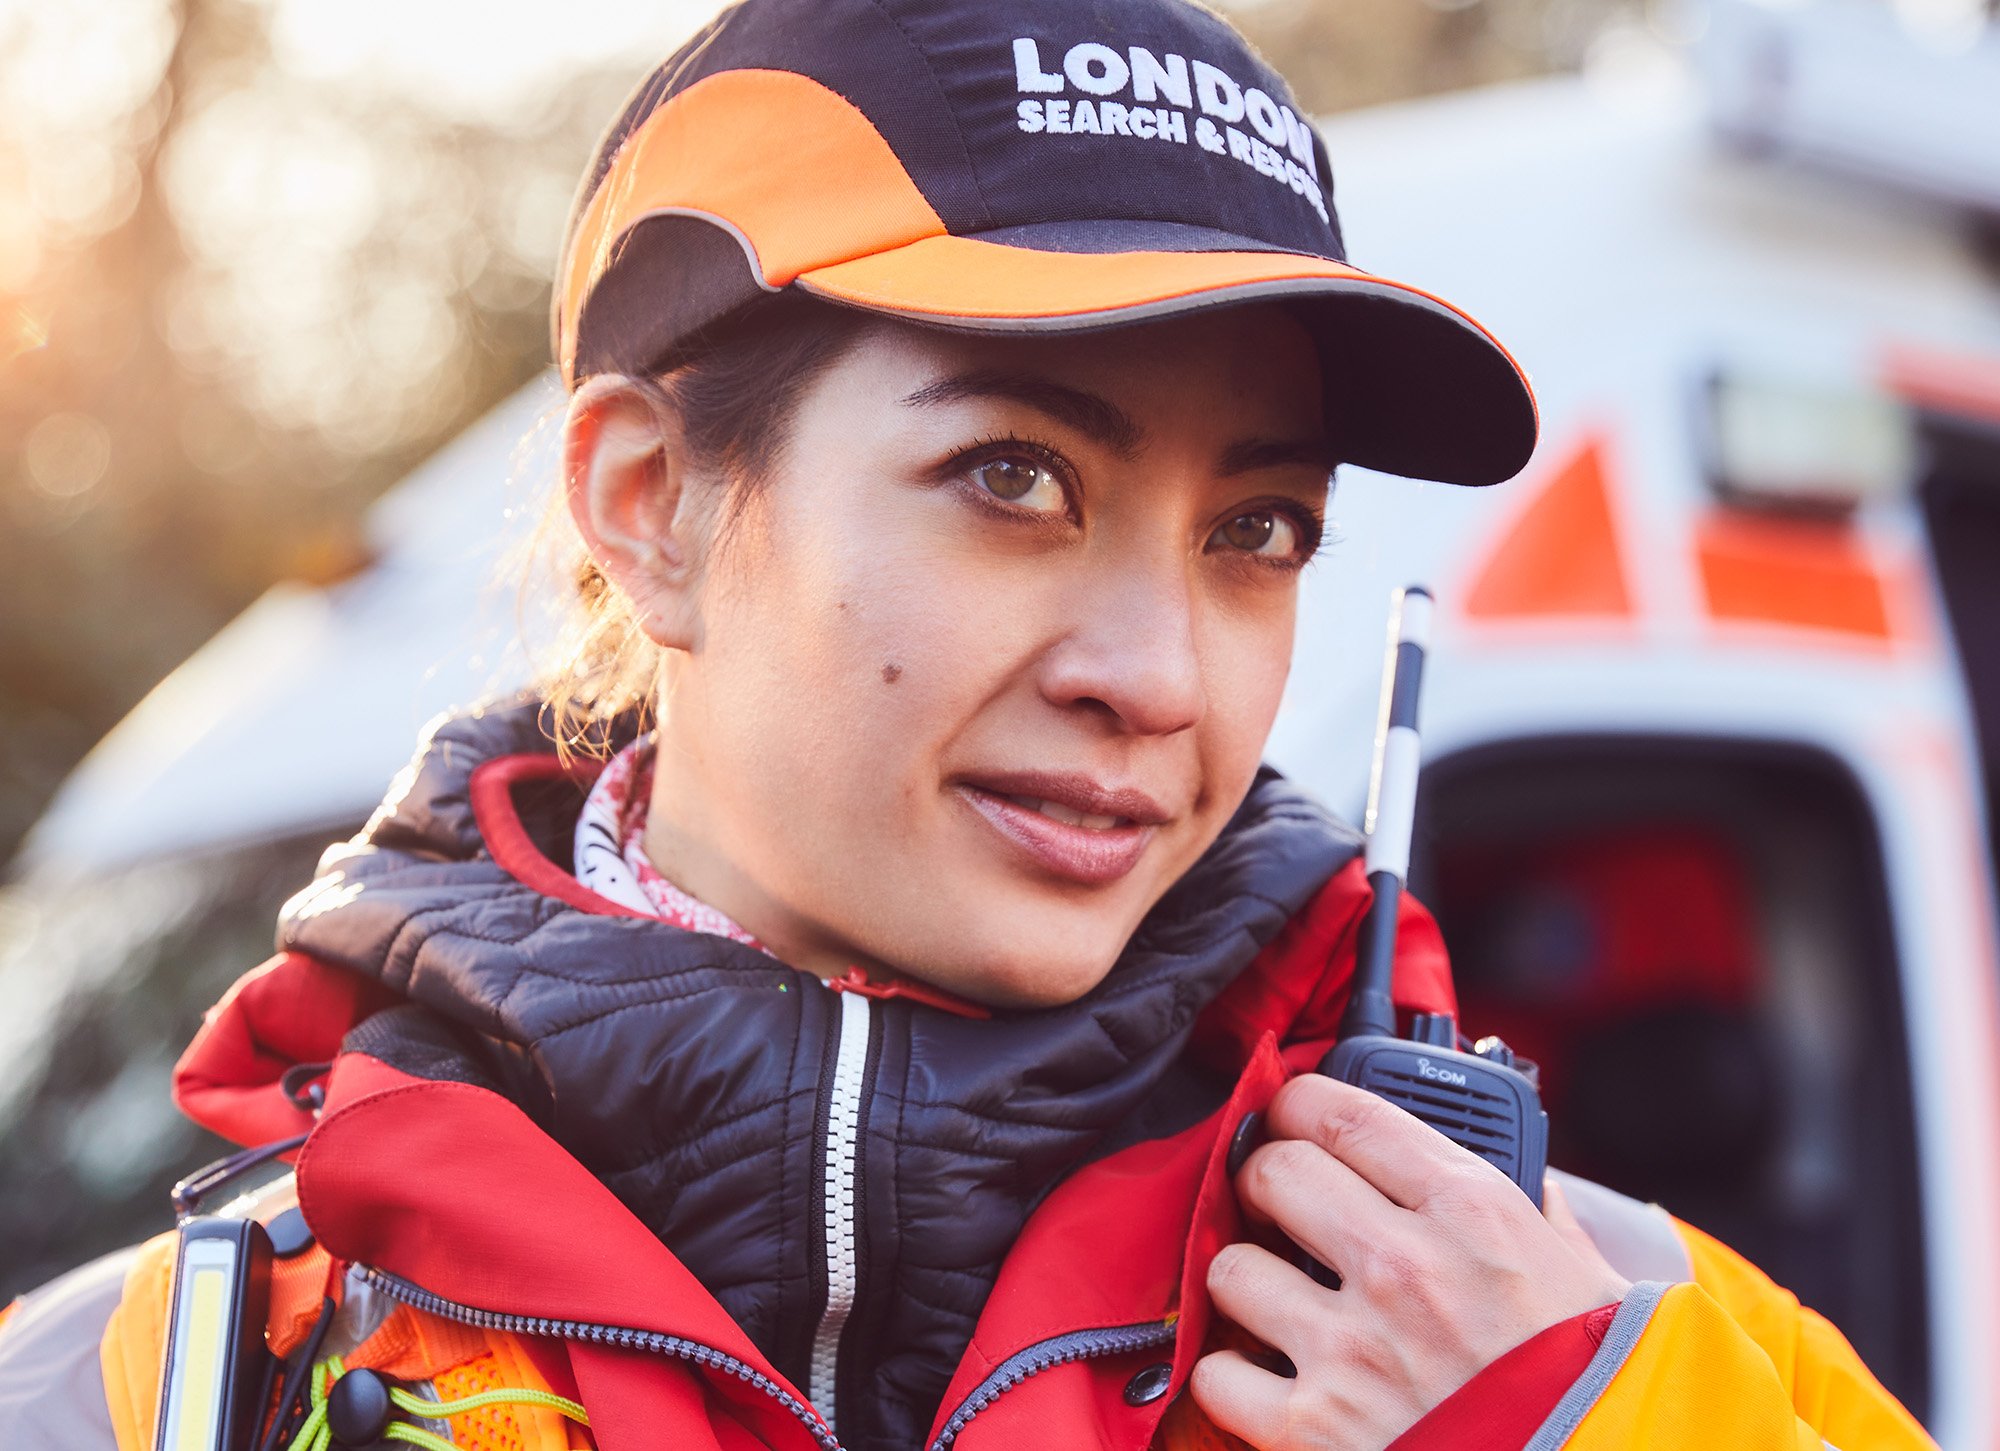 LONSAR-search-rescue-team-woman.jpg